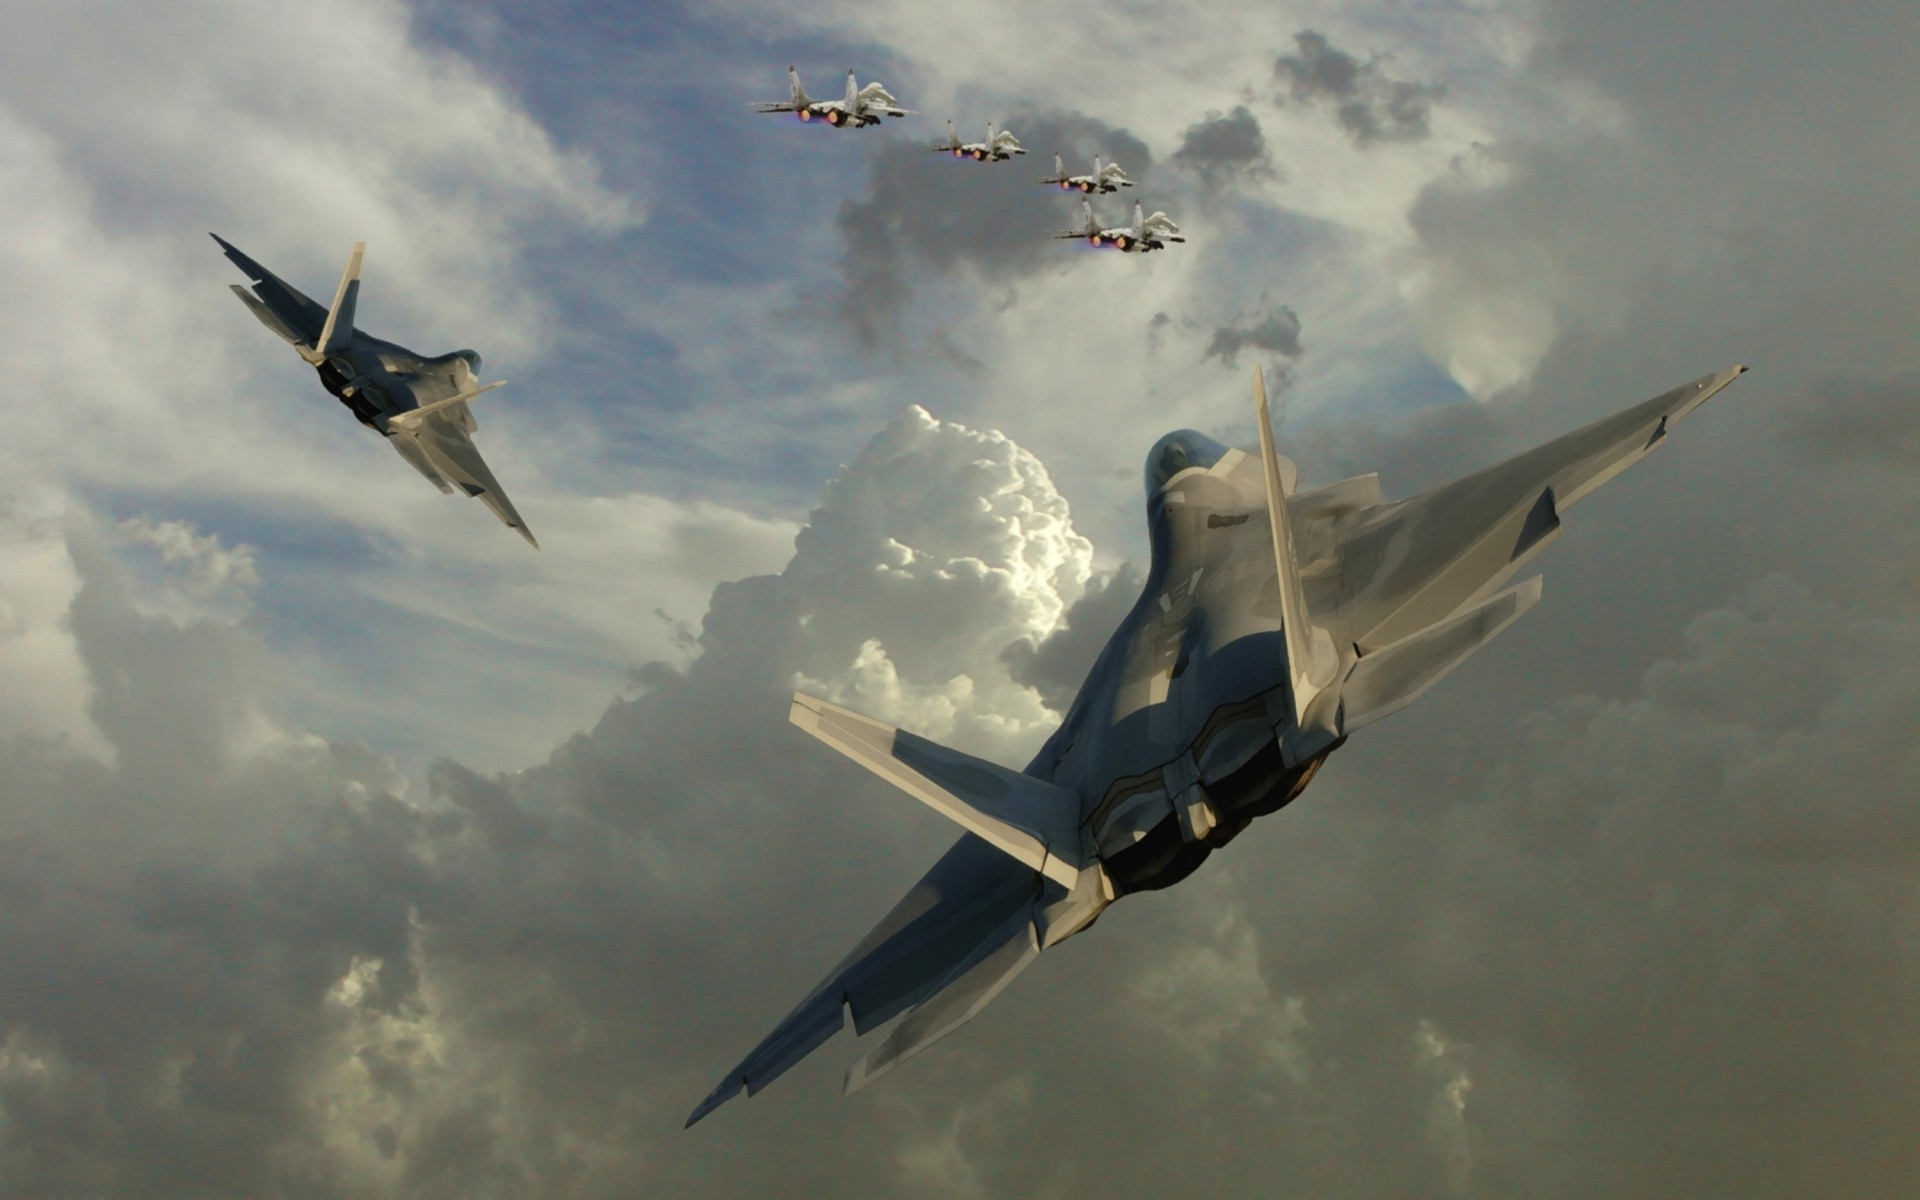 General 1920x1200 military aircraft sky F-22 Raptor vehicle military vehicle aircraft digital art